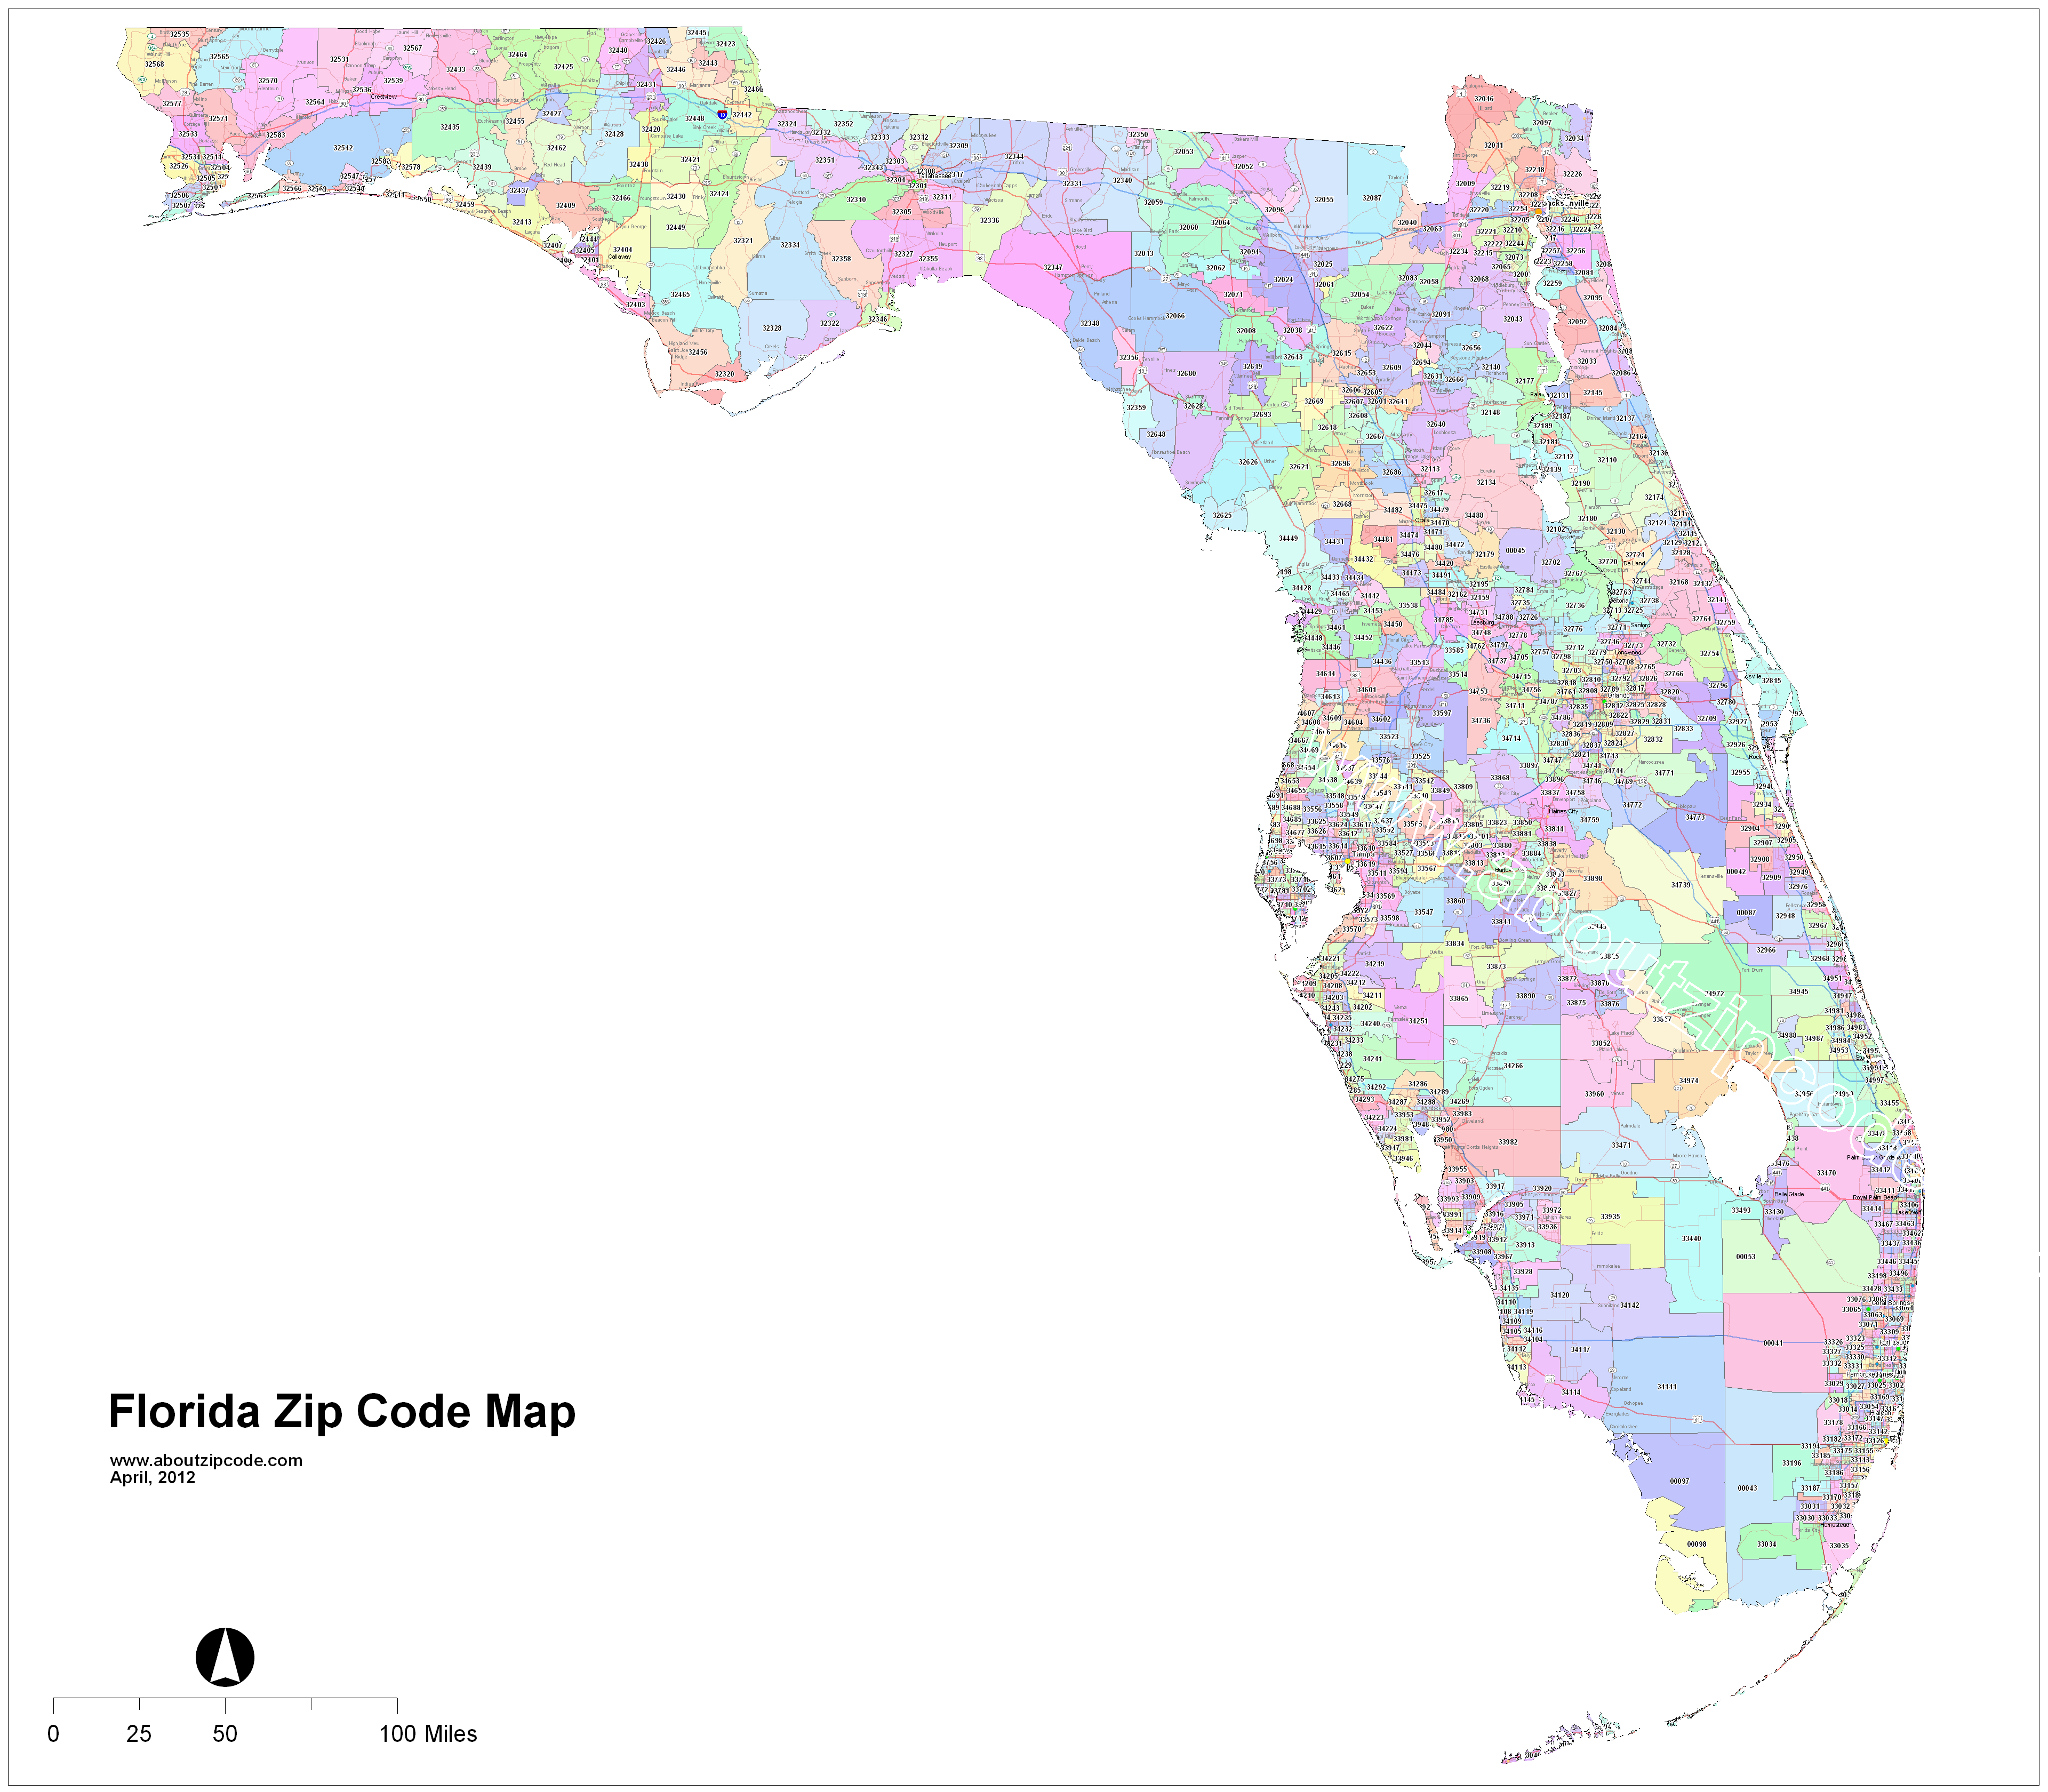 map of florida zip codes free Florida Zip Code Maps Free Florida Zip Code Maps map of florida zip codes free